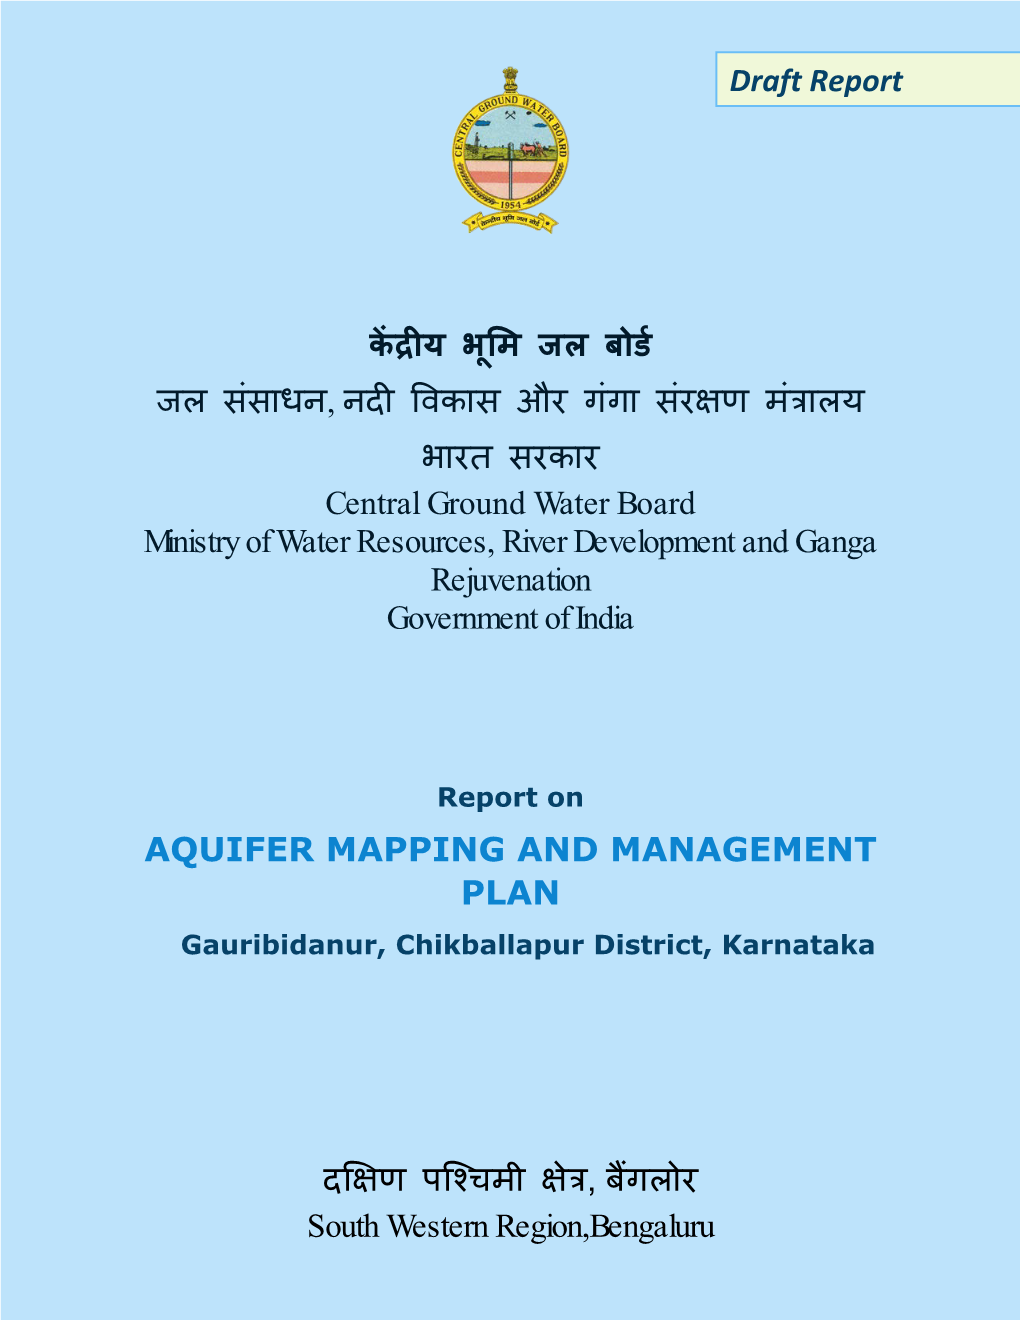 Gauribidanur Taluk Aquifer Maps and Management Plan, Chikballapur District, Karnataka